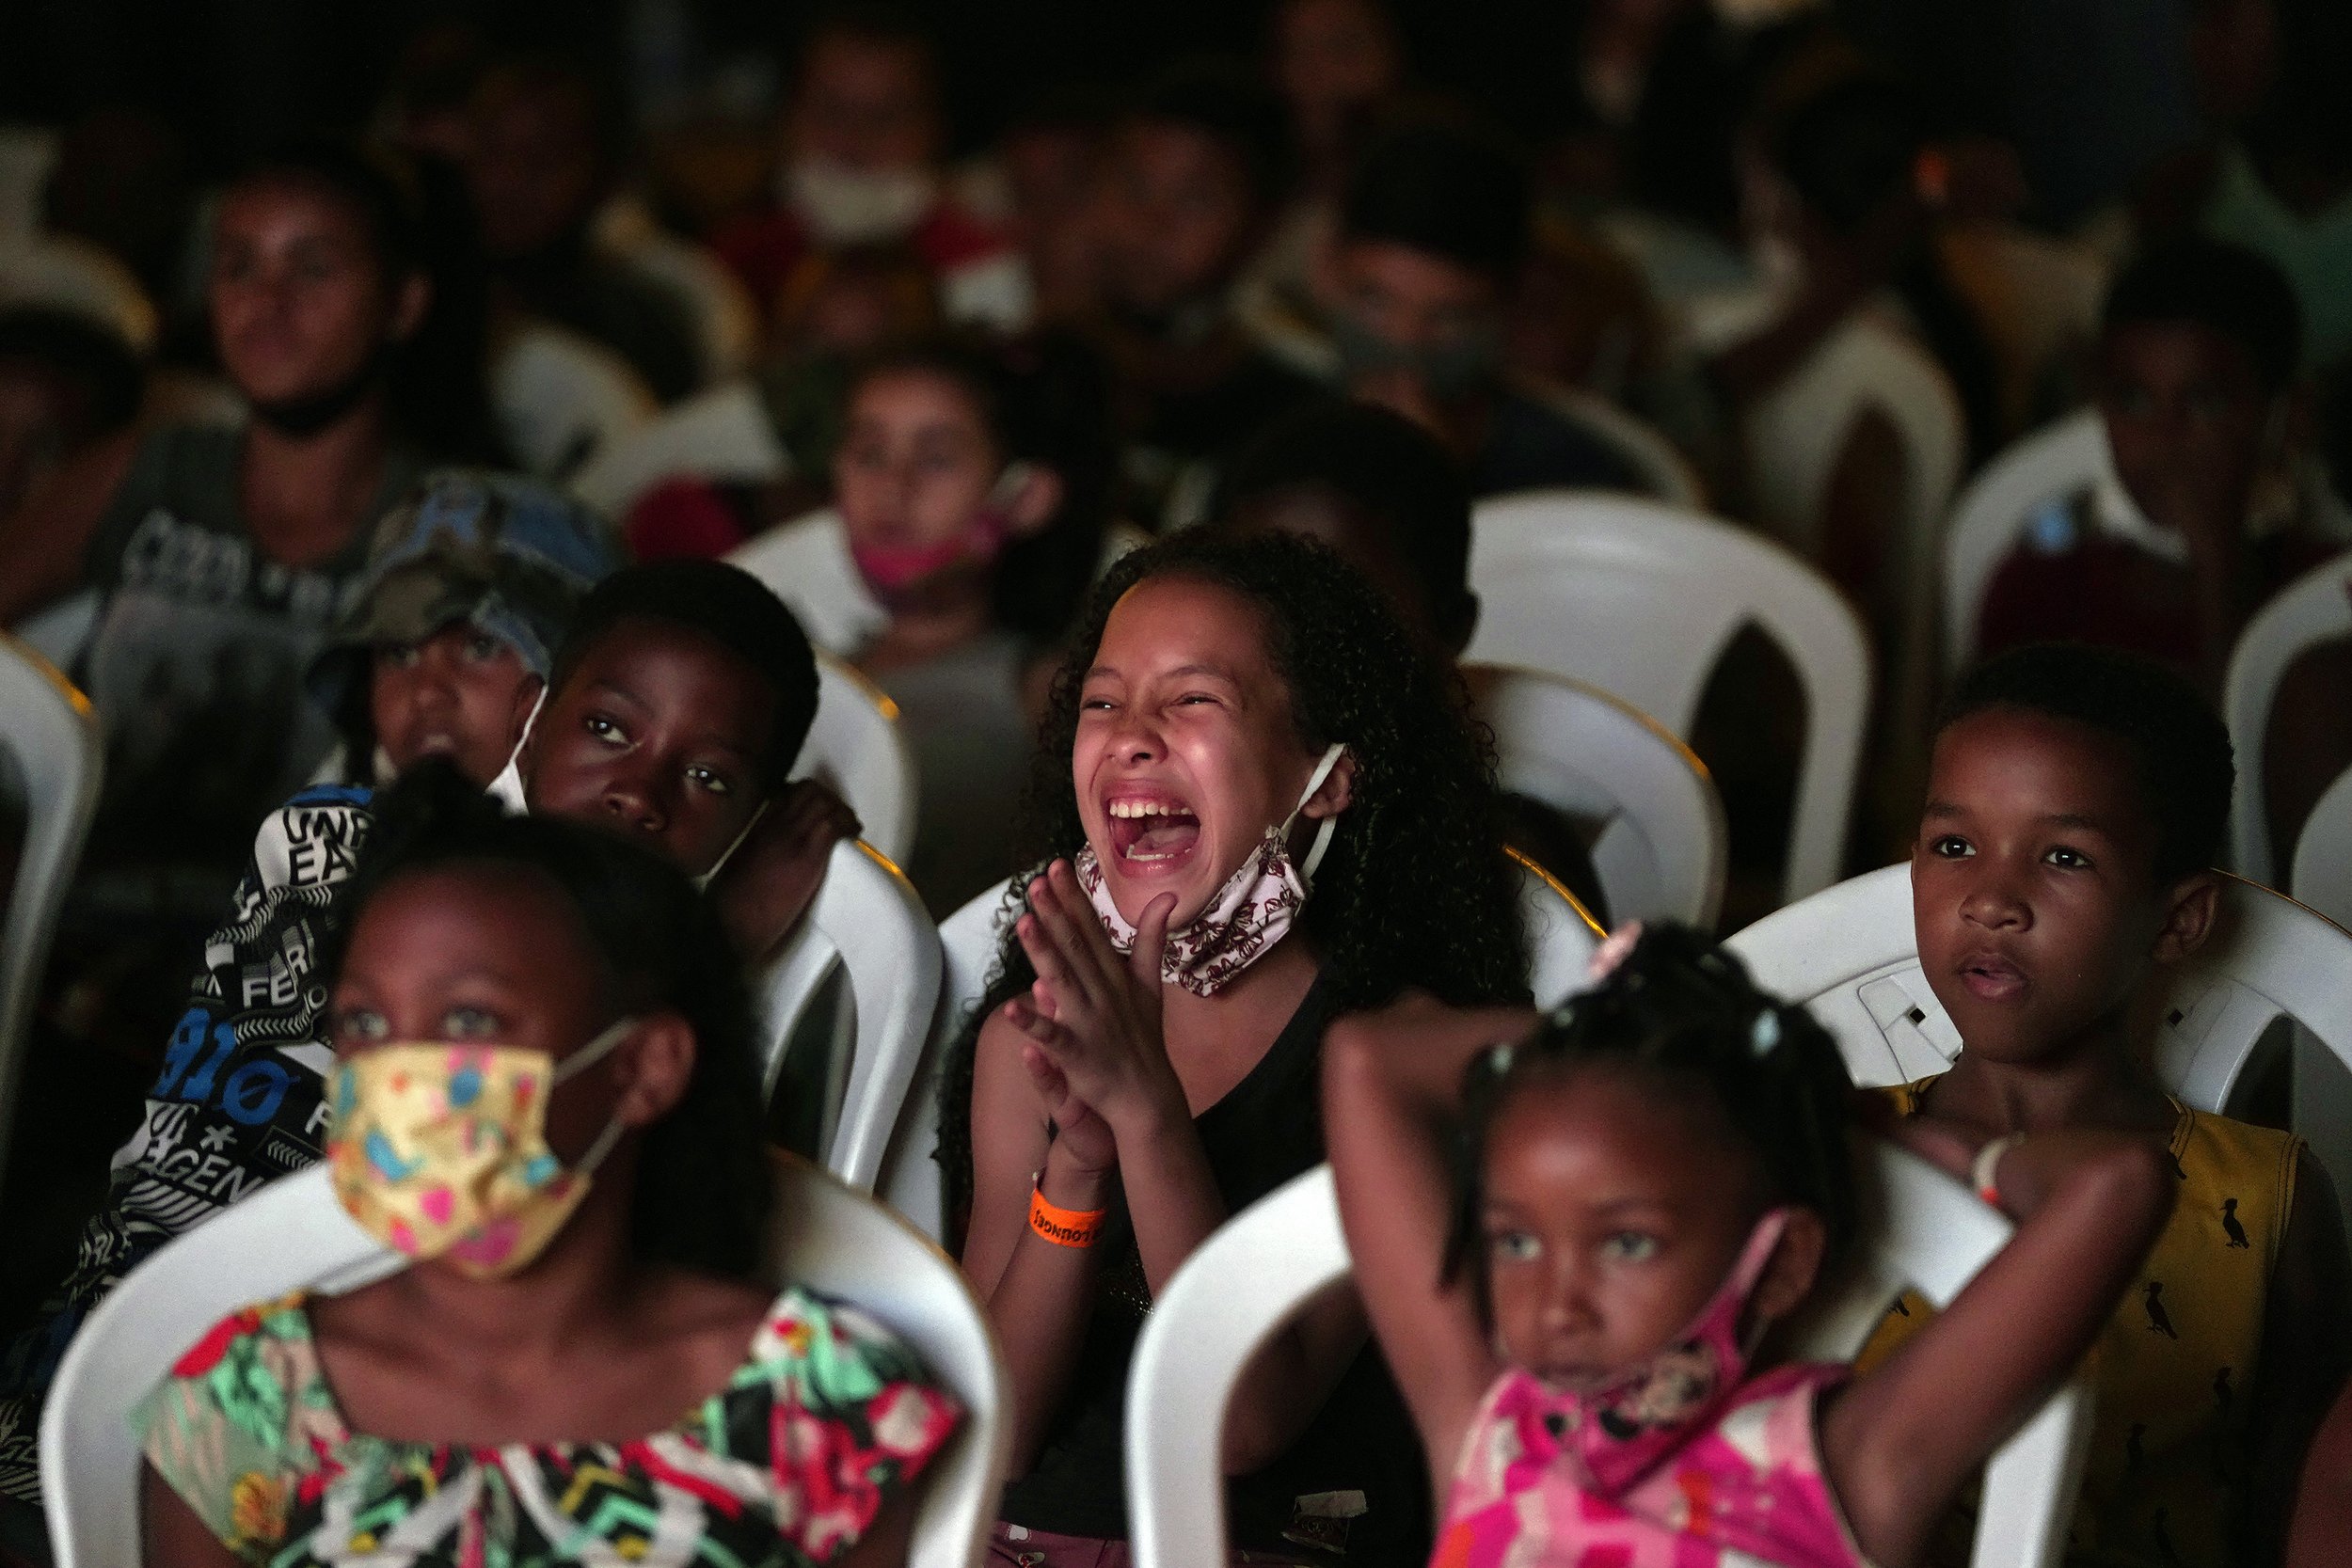  Children watch a movie of the "Cinema no Morro" or "Cinema on the hill" project in a cultural center at Vila Cruzeiro favela in Rio de Janeiro, Brazil, on Sept. 13, 2021. (AP Photo/Silvia Izquierdo) 